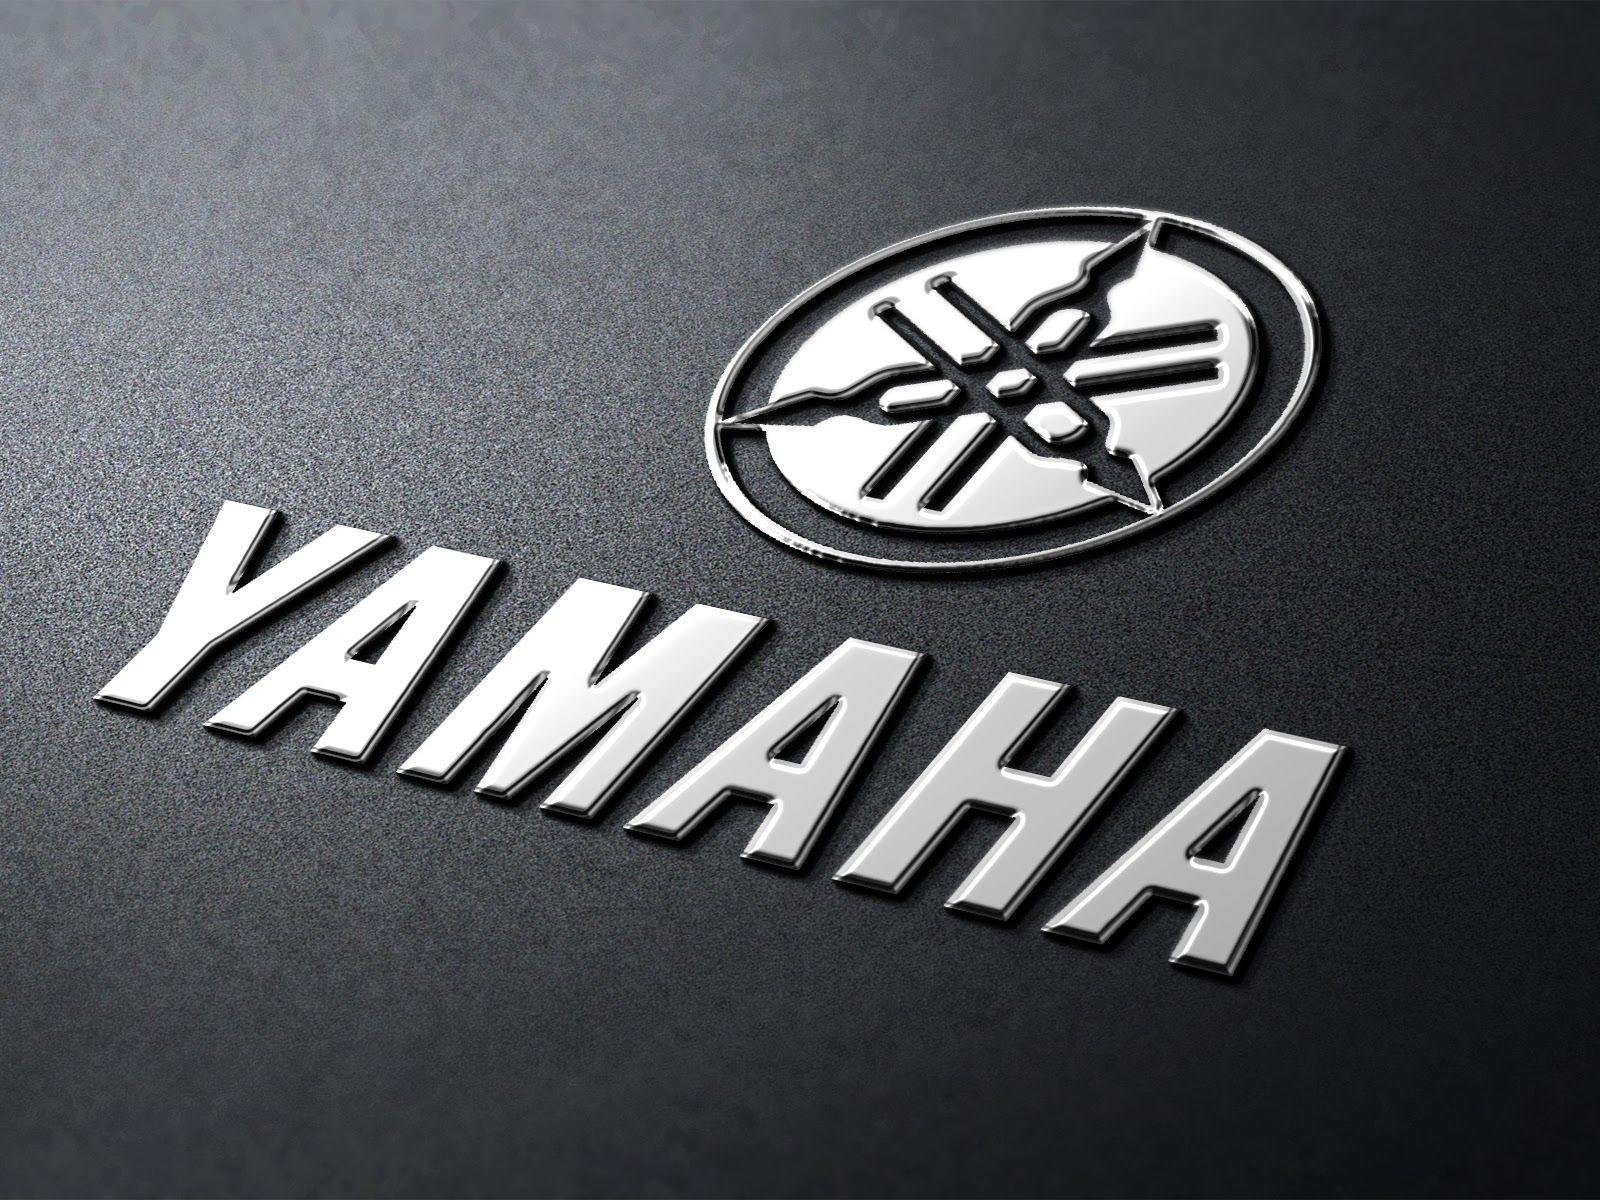 Yamaha Racing Wallpapers - Top Free Yamaha Racing Backgrounds